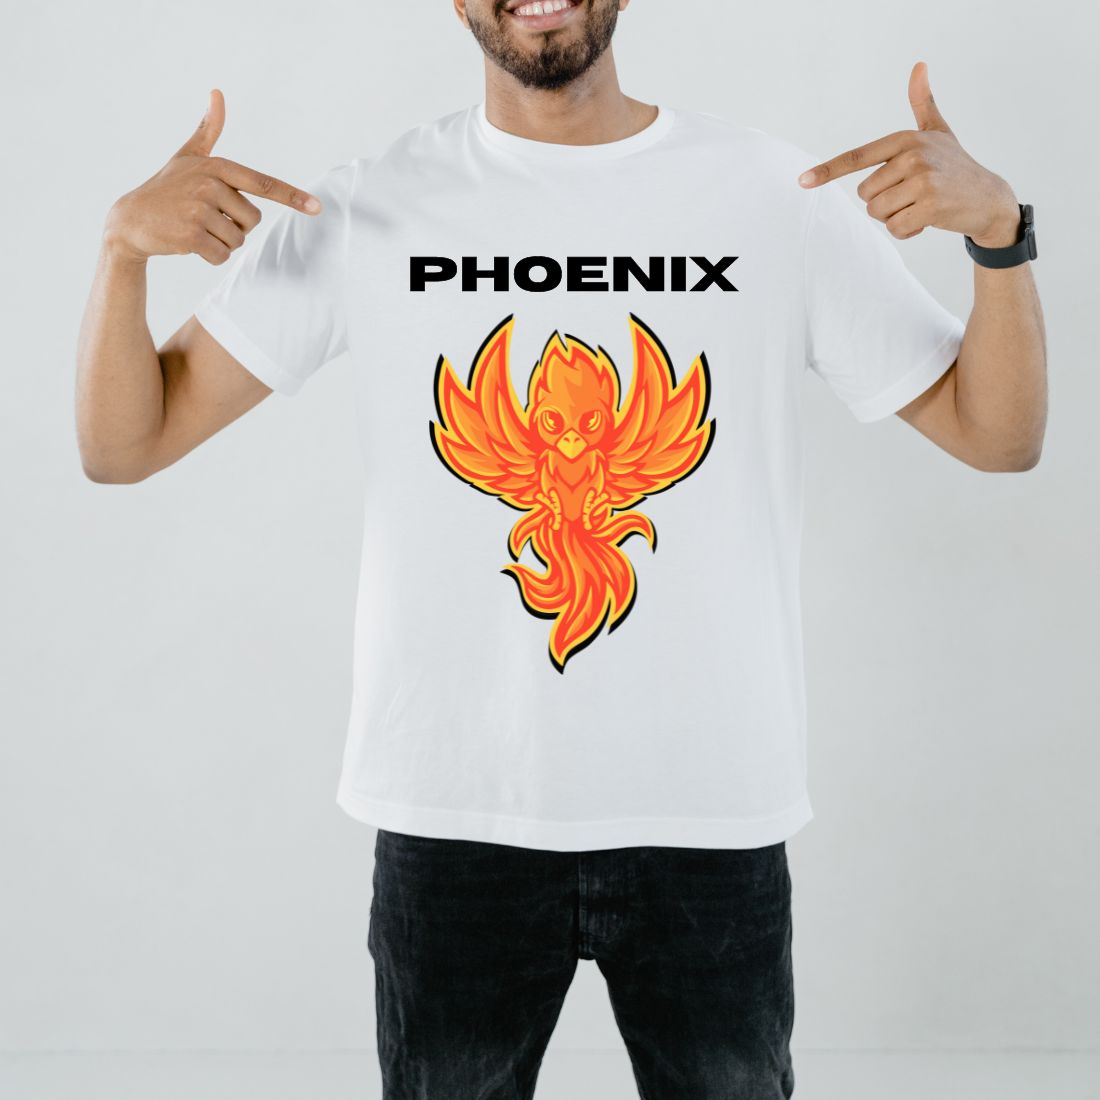 Phoenix Bird design preview image.